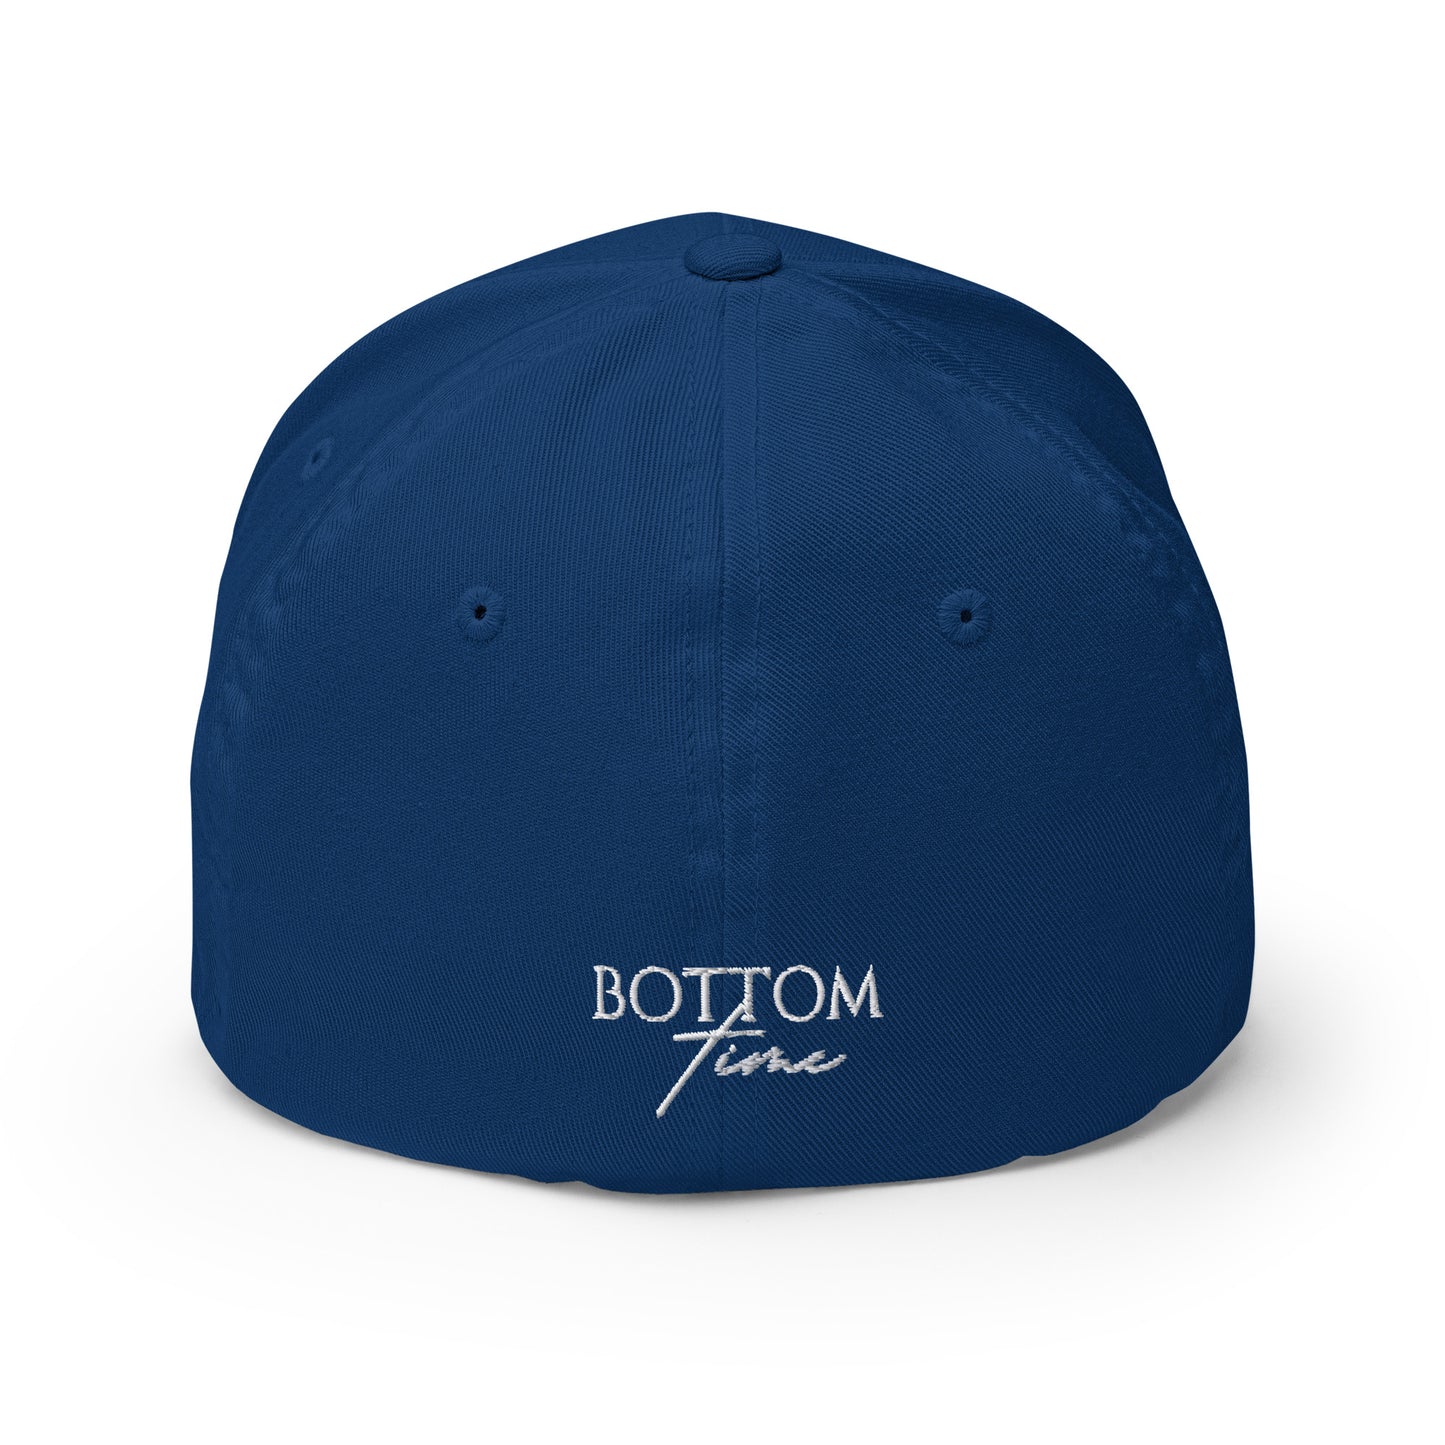 Bottom Time™ Eco-Friendly, Scuba Diver Hat, Structured Twill Cap, Let's Go Make Some Bubbles